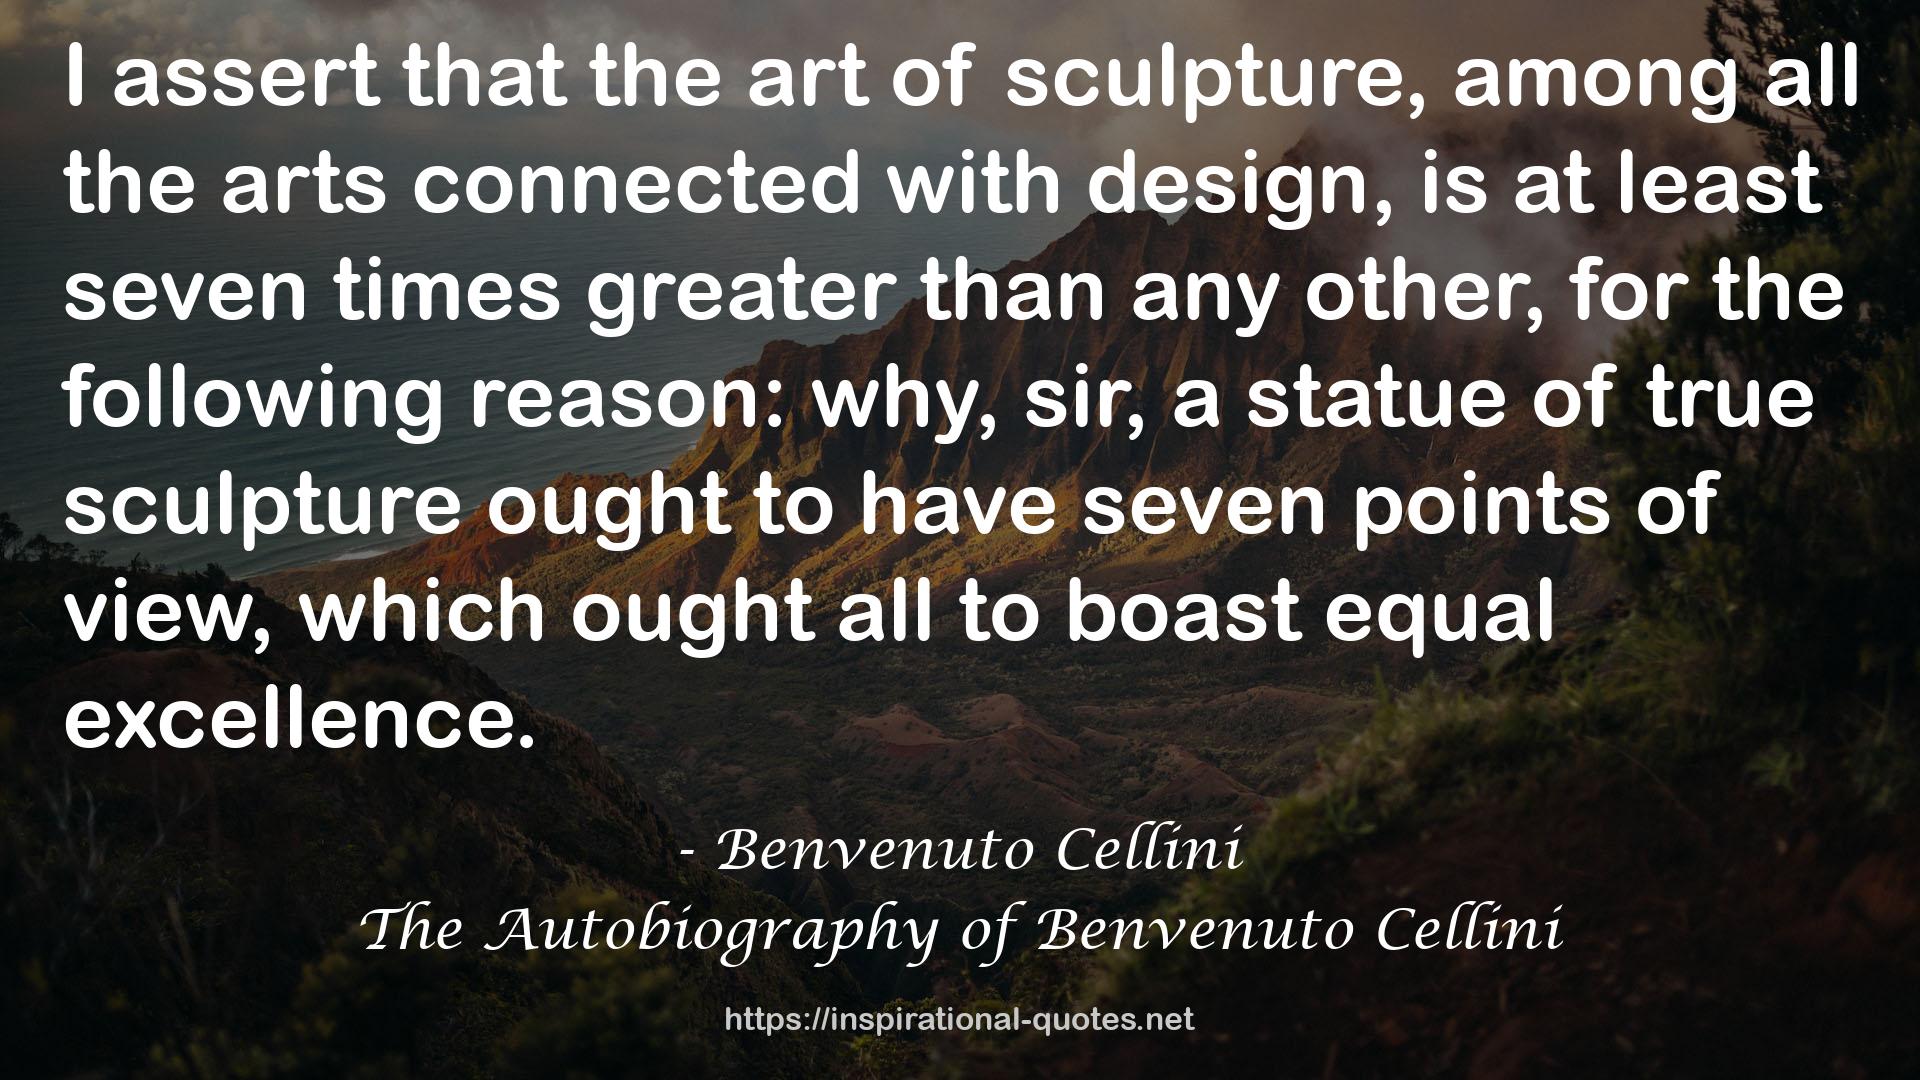 The Autobiography of Benvenuto Cellini QUOTES